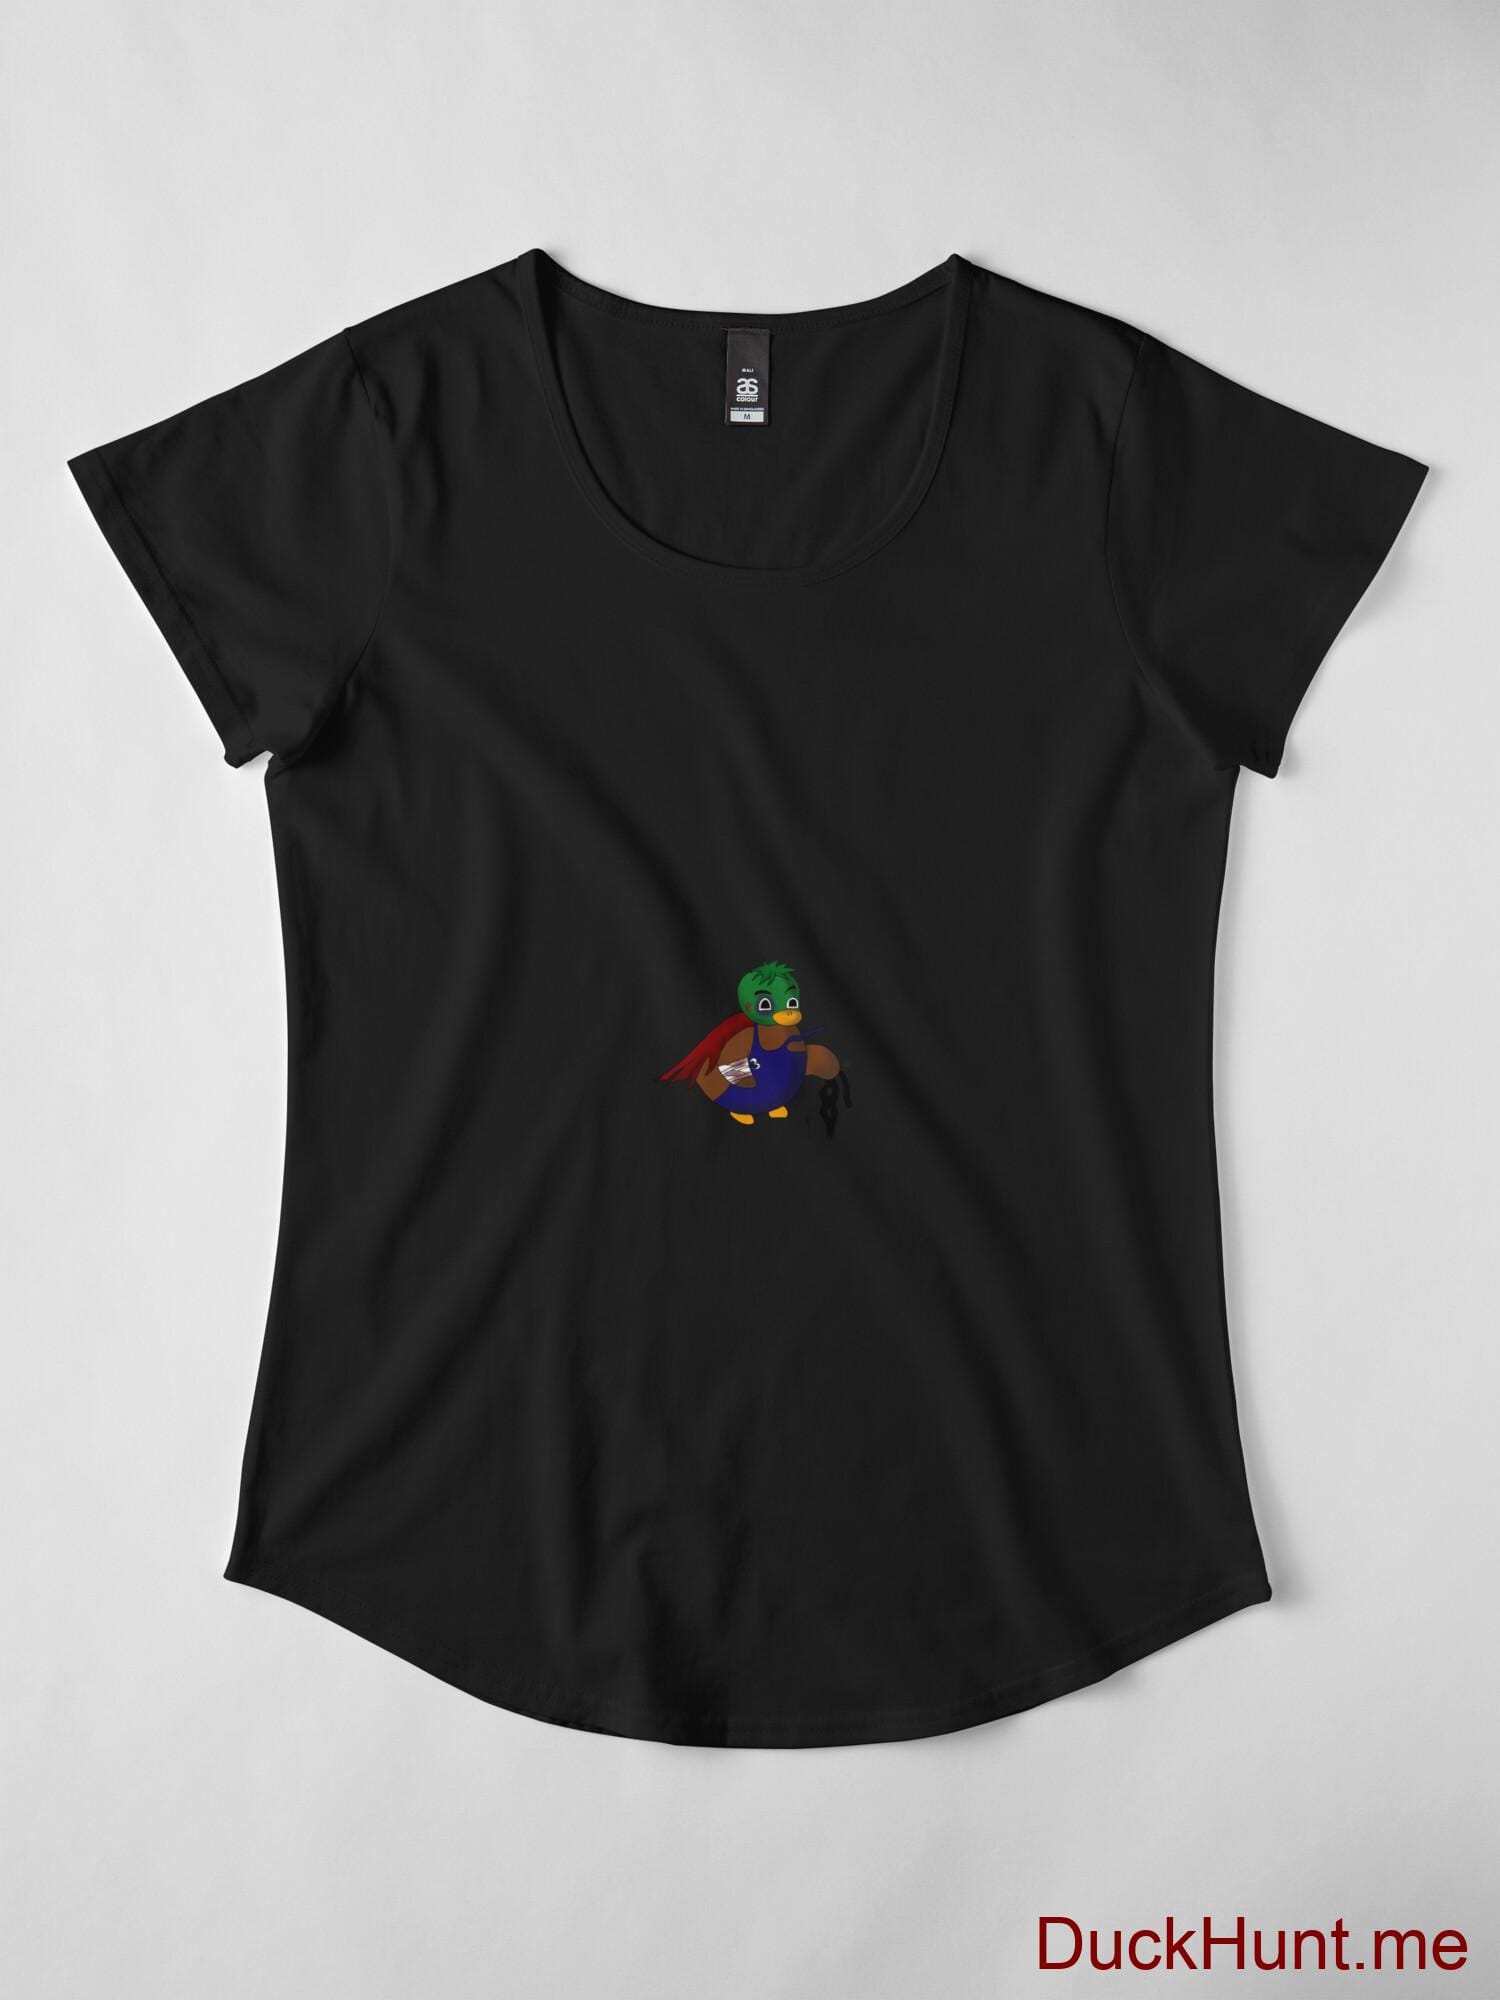 Dead DuckHunt Boss (smokeless) Black Premium Scoop T-Shirt (Front printed) alternative image 3